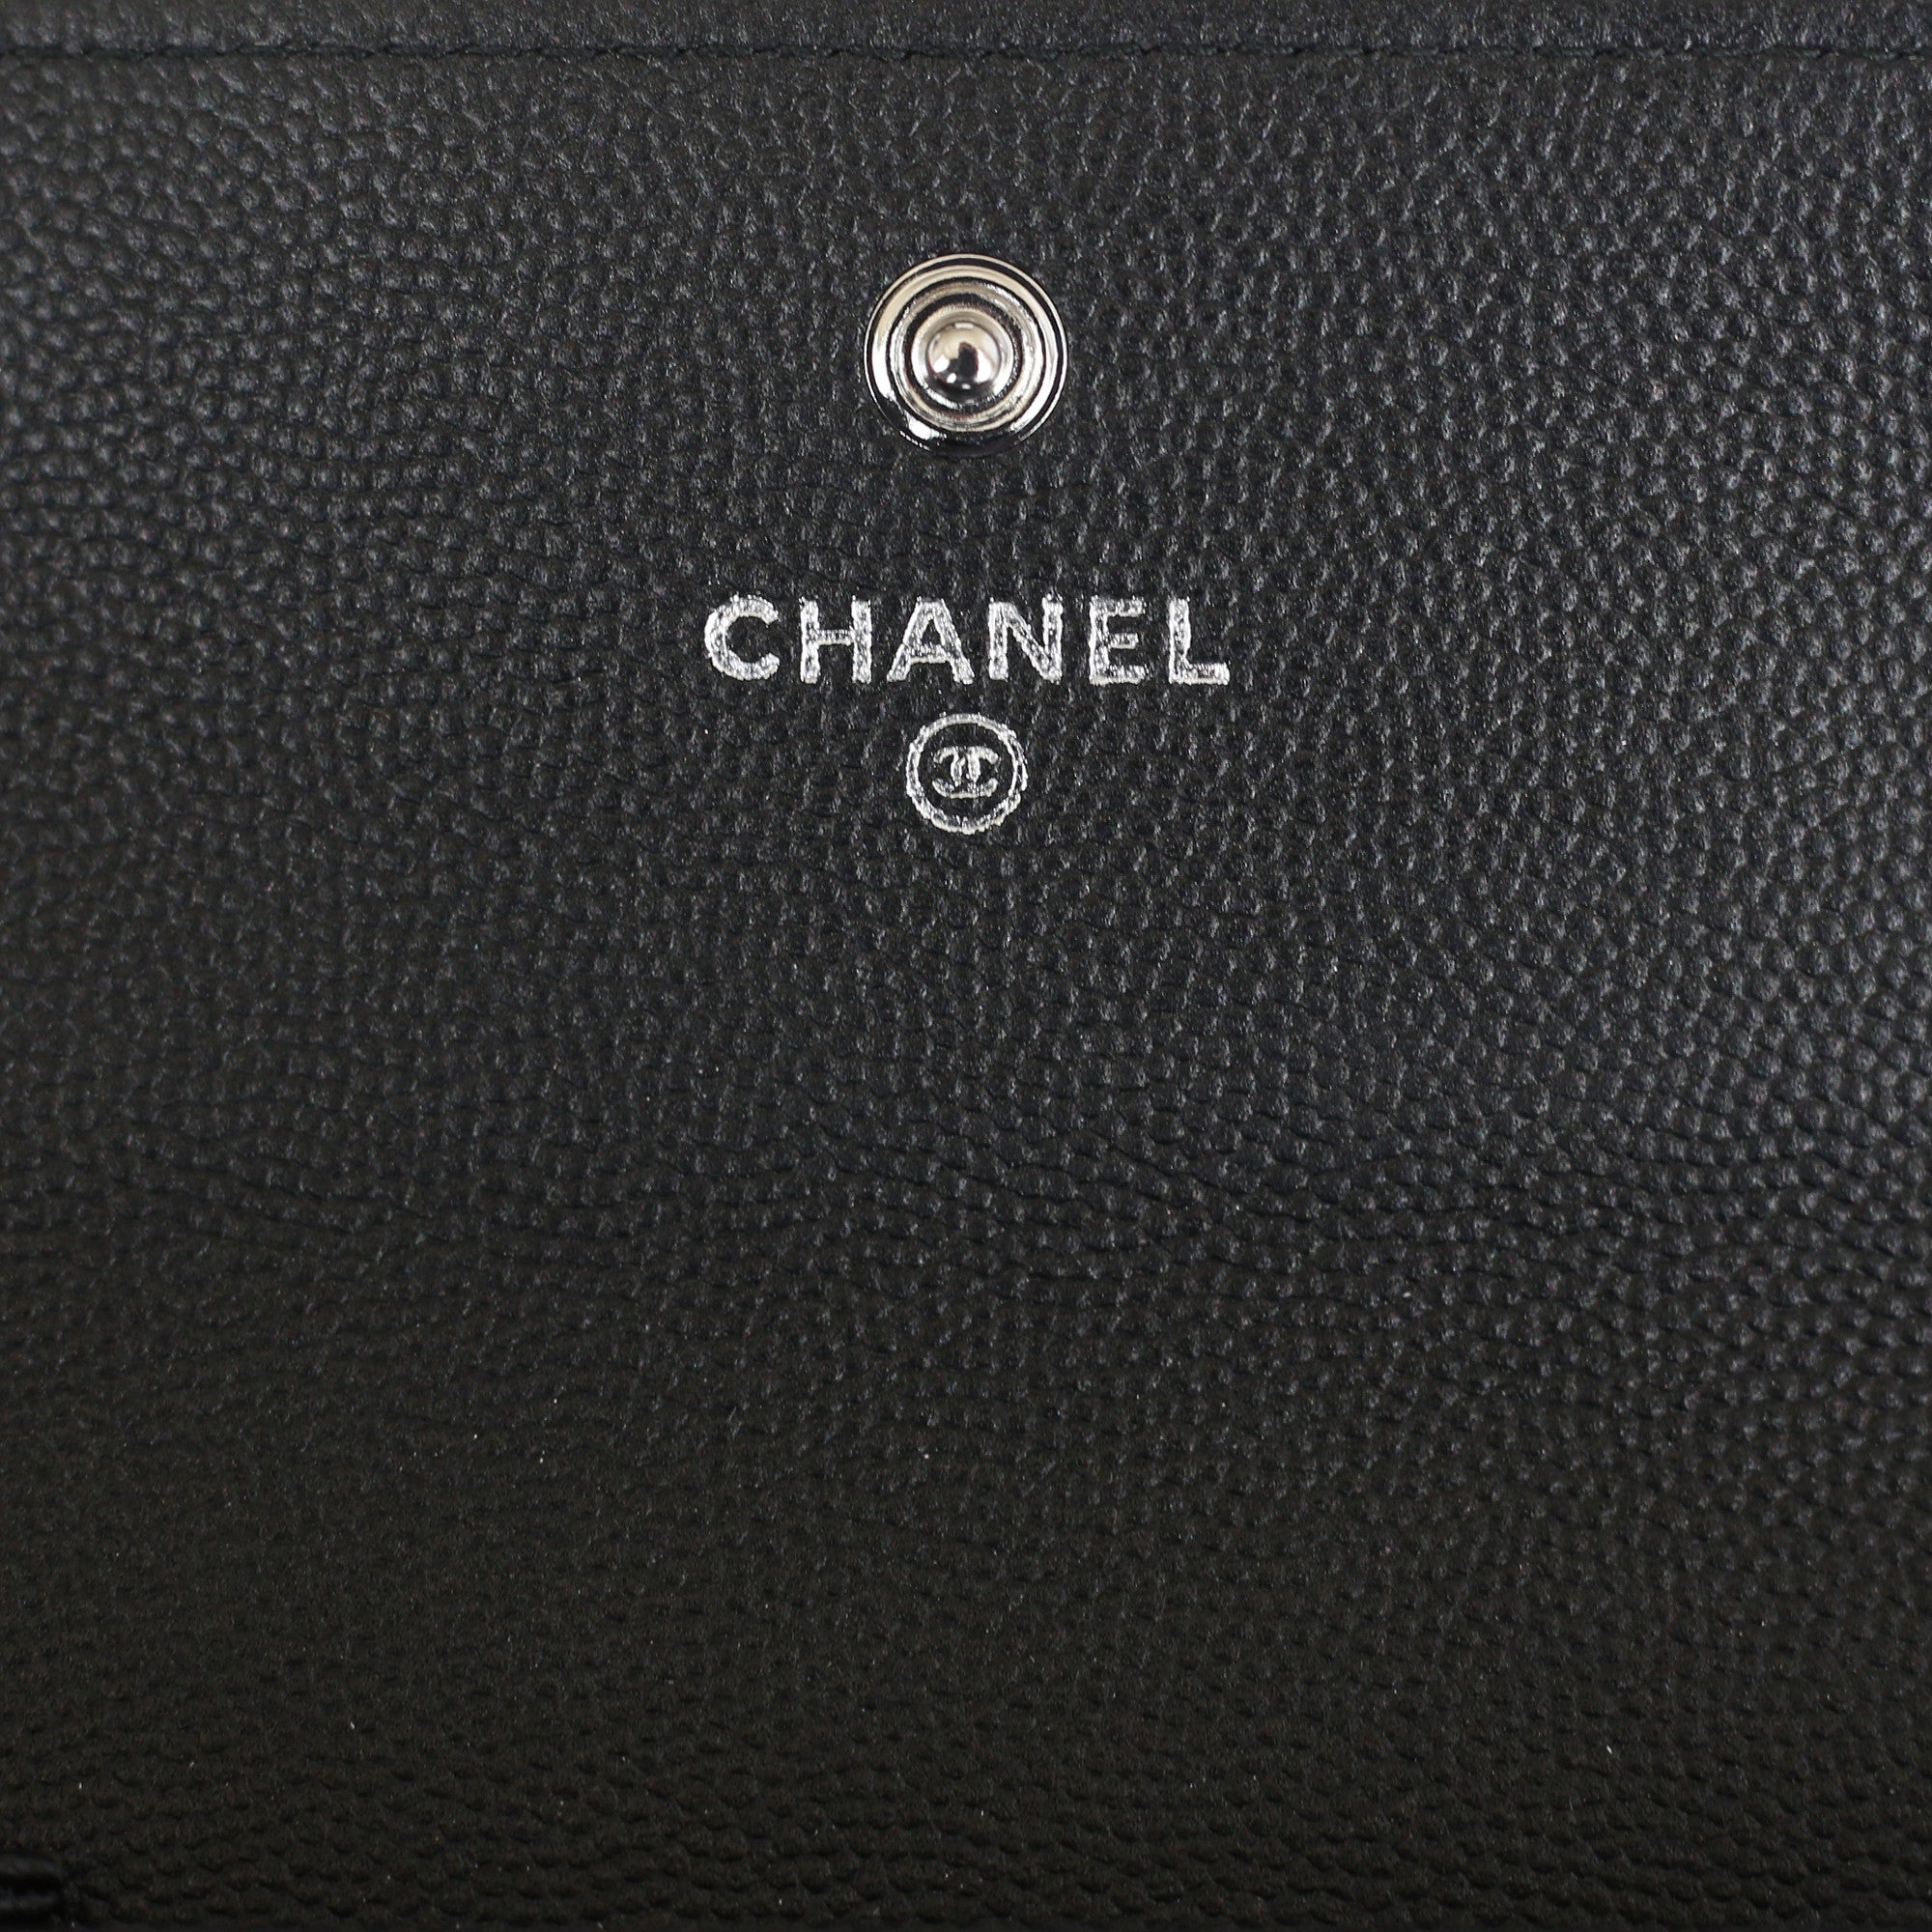 Chanel Metallic Blue Caviar Leather Medium CC Zip Around Wallet Chanel